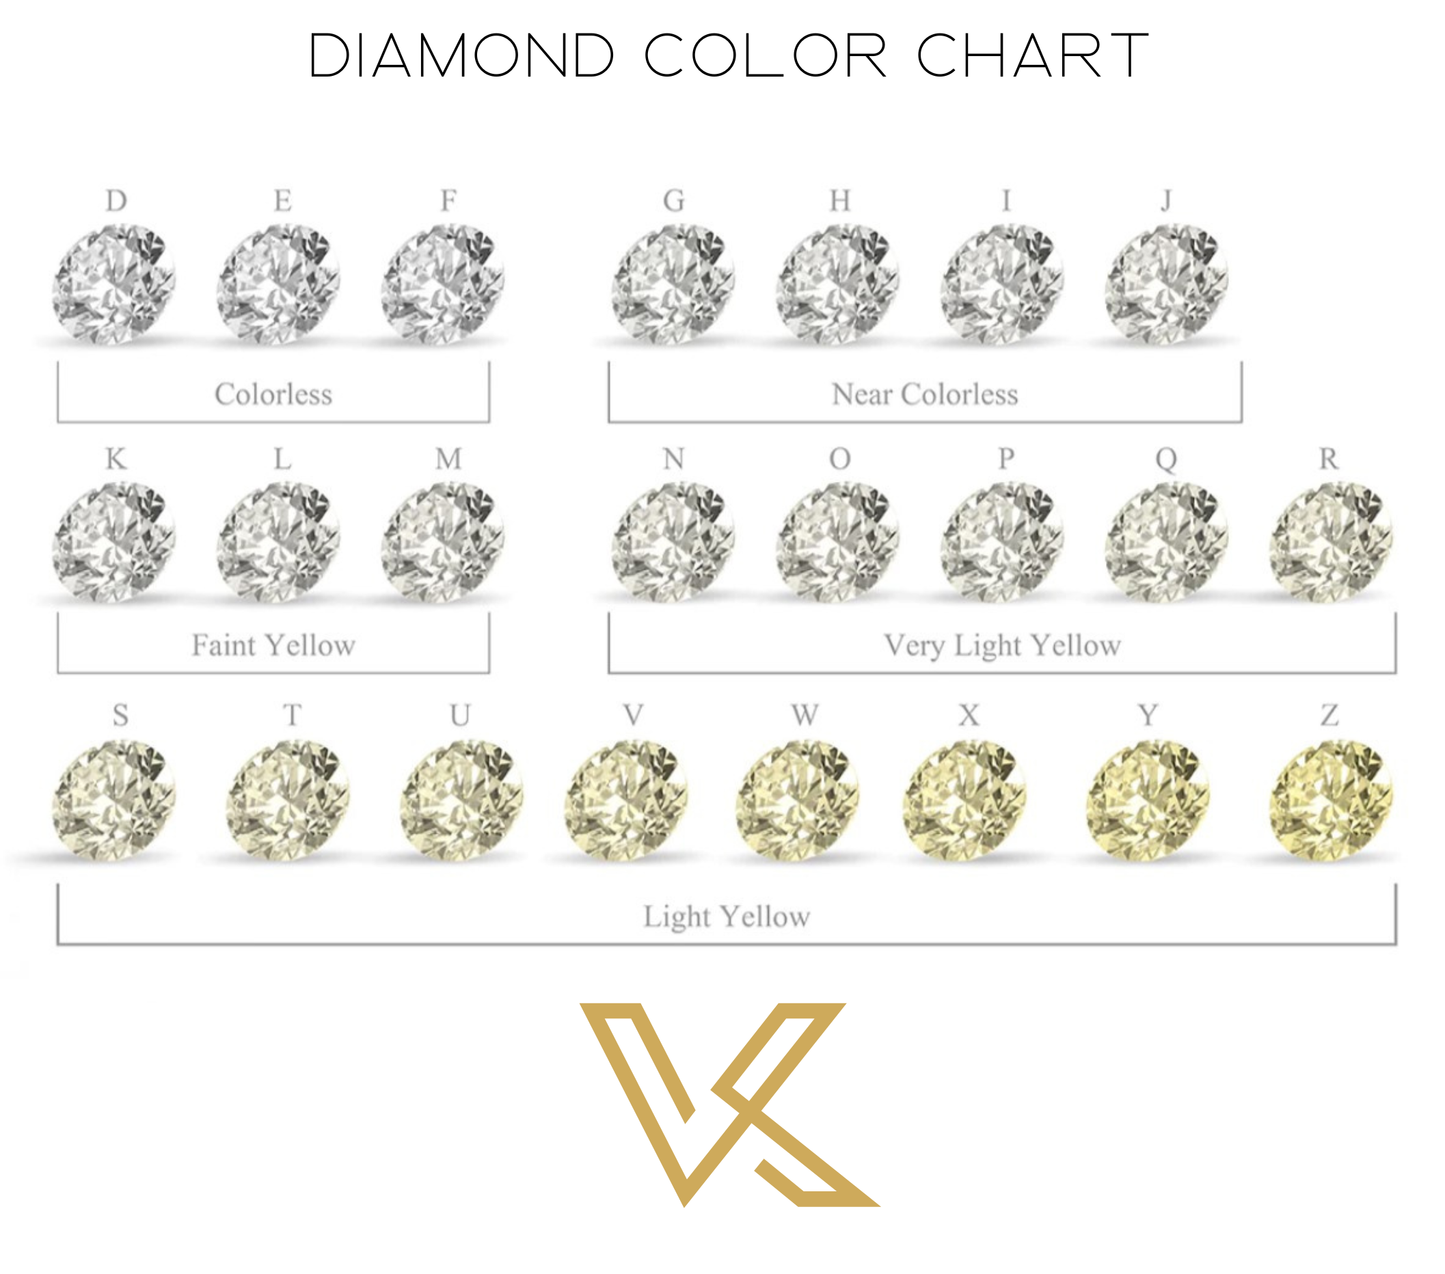 Luxury Diamond Engagement Rings.  5.0 Carat Fancy Yellow Diamond. GIA.